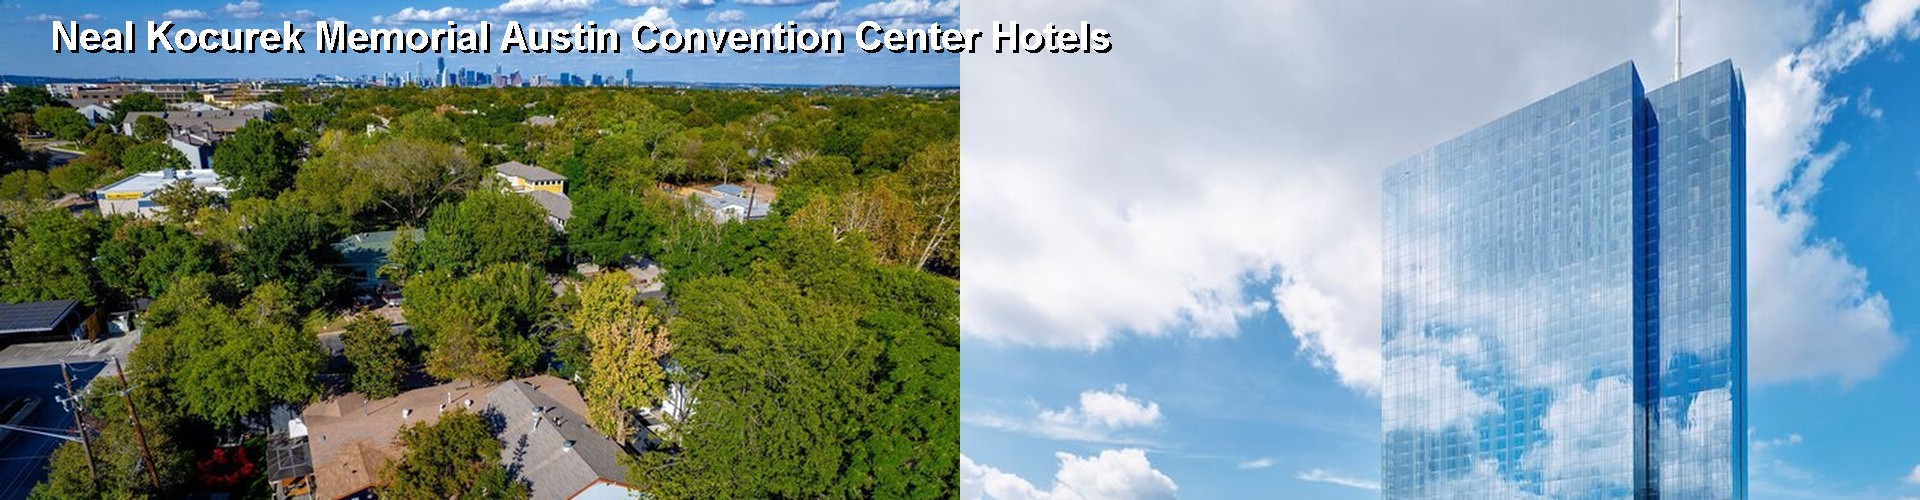 5 Best Hotels near Neal Kocurek Memorial Austin Convention Center